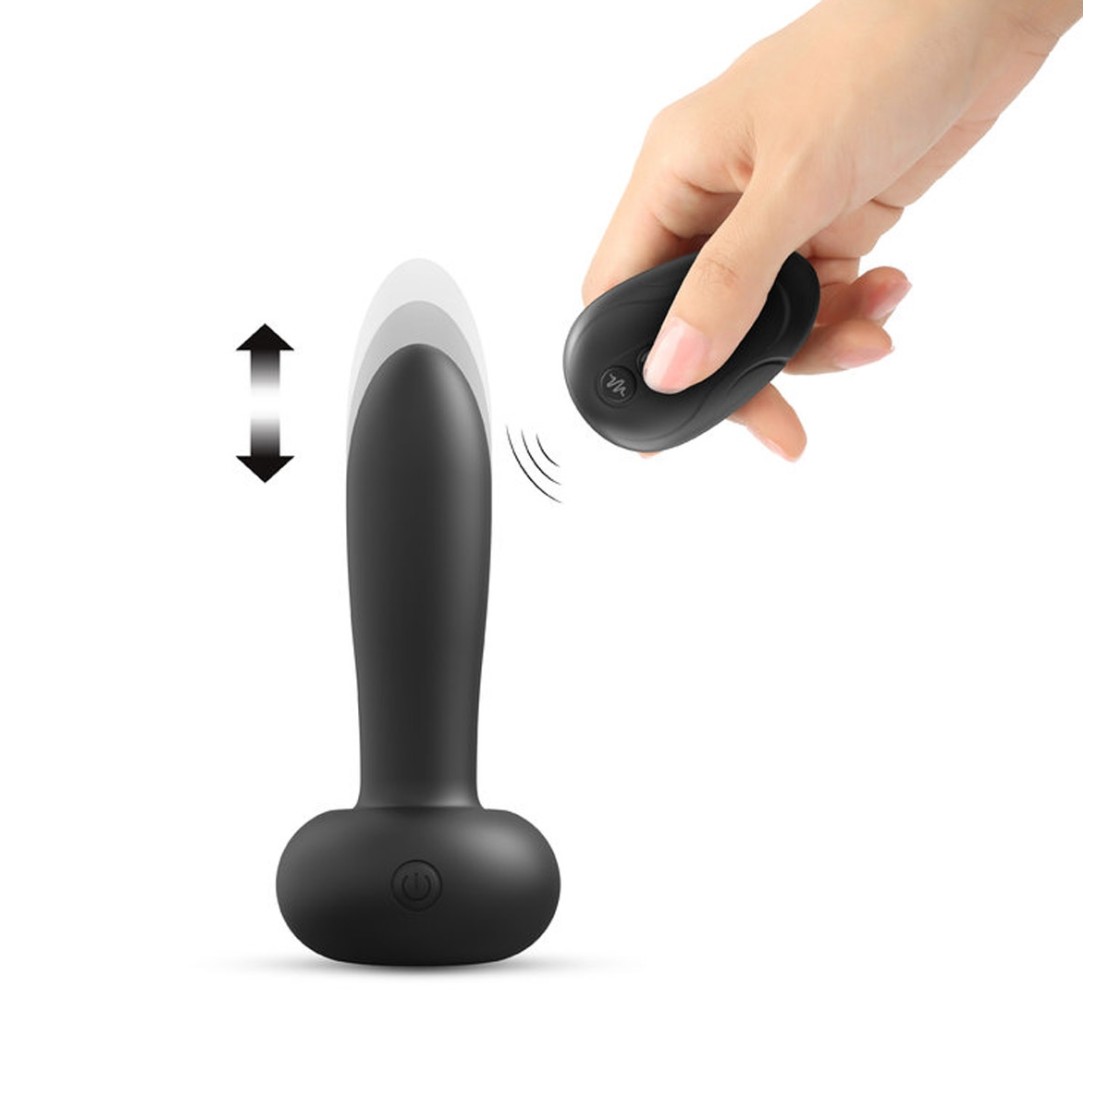 Plug anale doppia stimolazione, Deep Thrust Dorcel sex toy anale